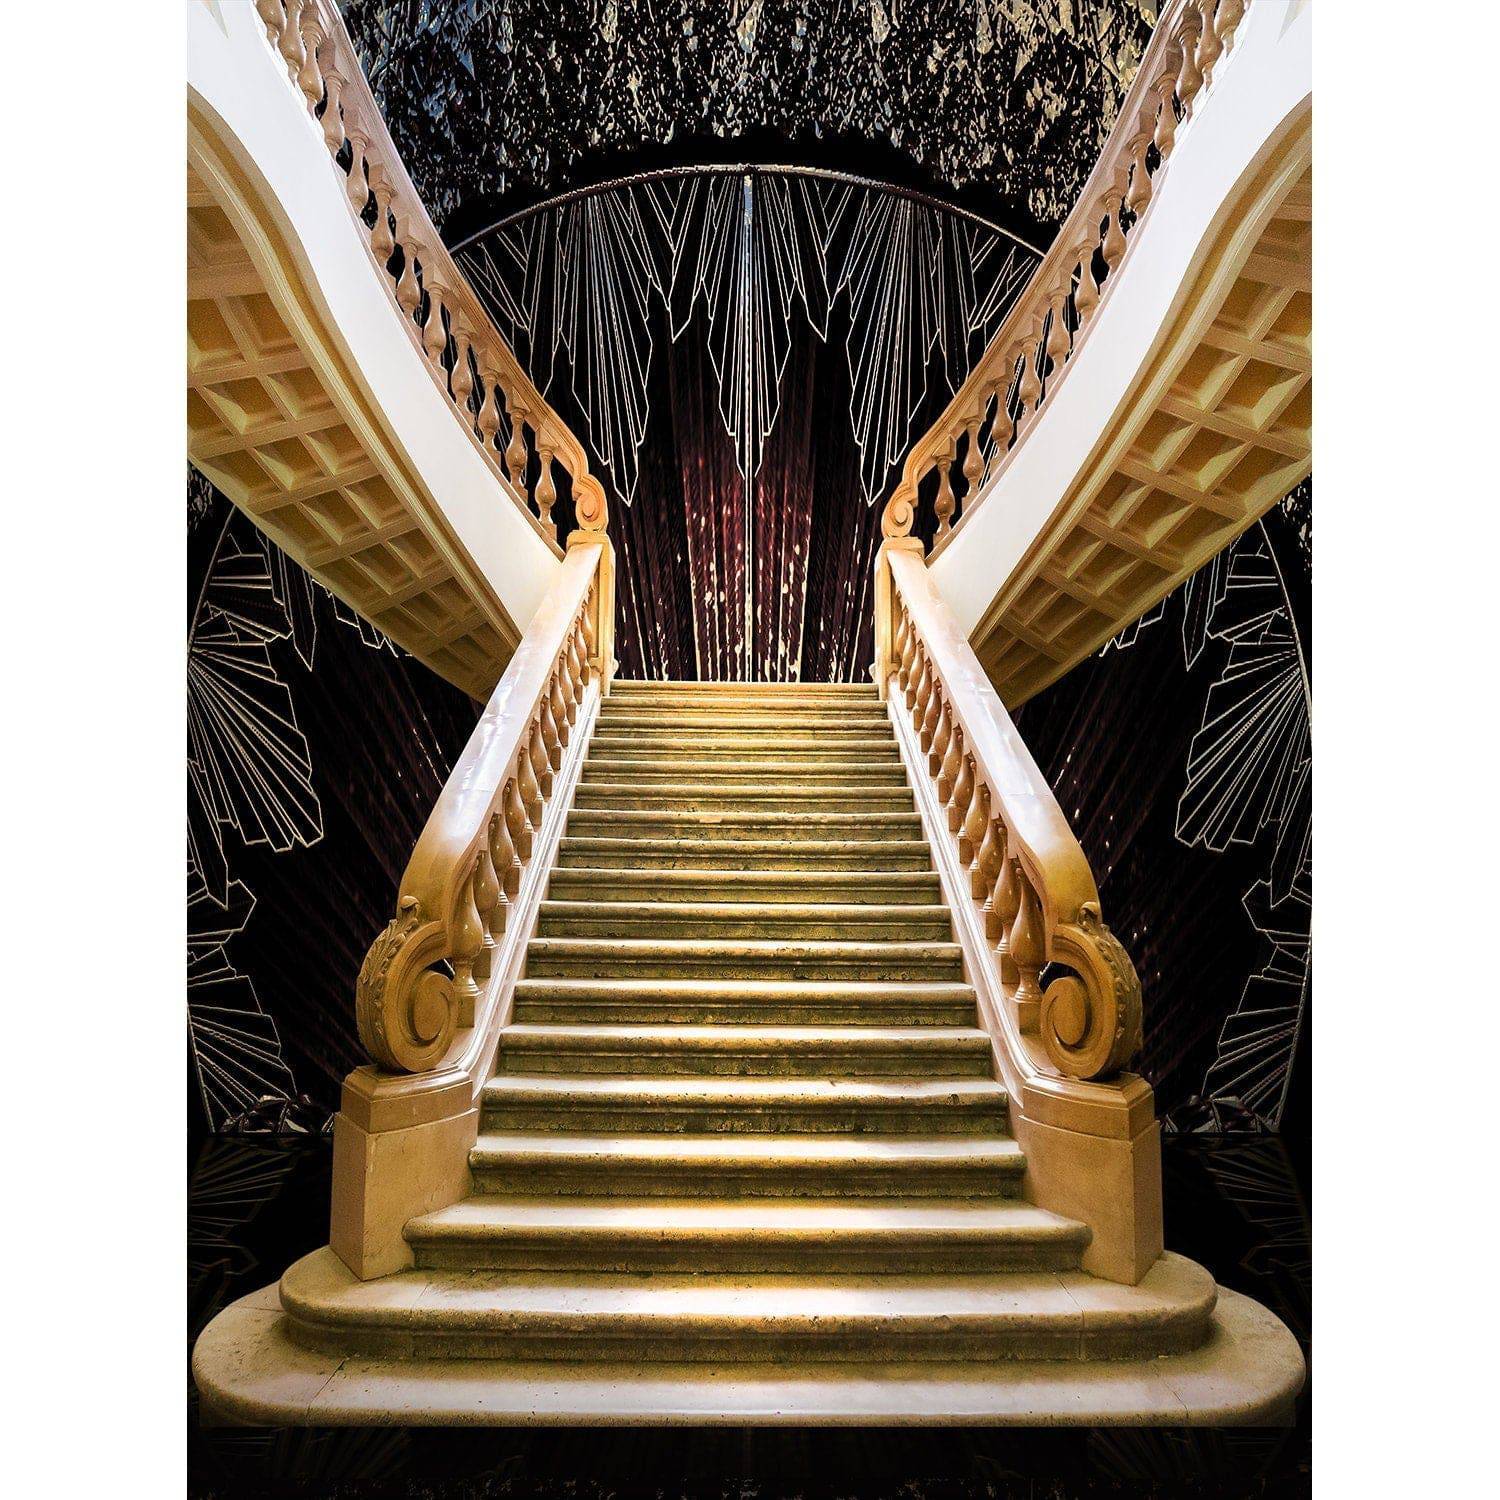 1920s Art Deco Staircase Photo Backdrop - Pro 8  x 10  